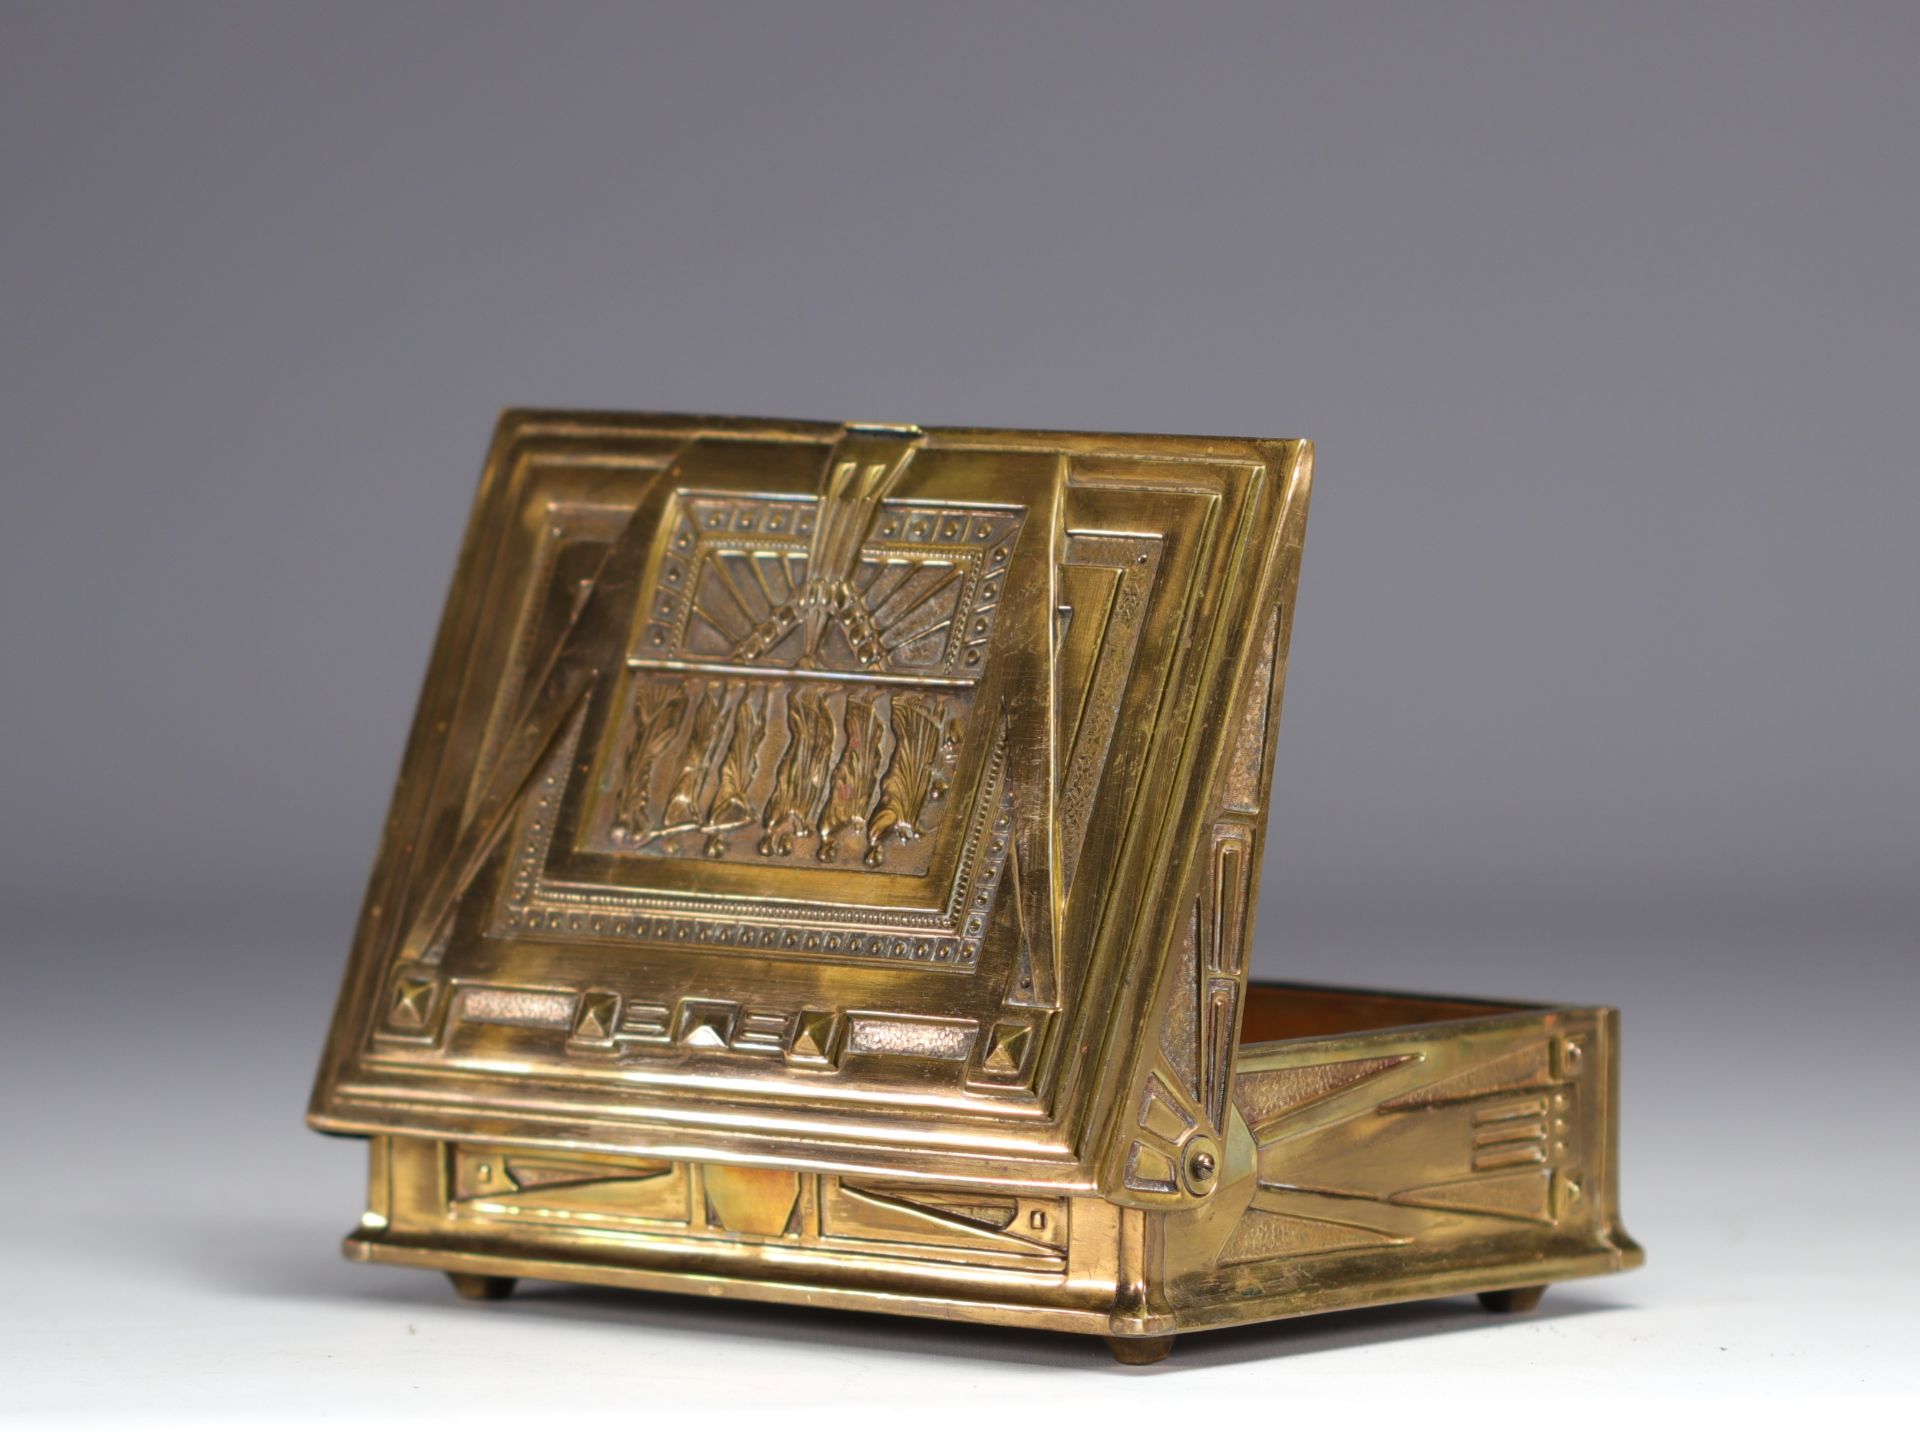 Art-Nouveau jewelry box by Erhard & Söhne.